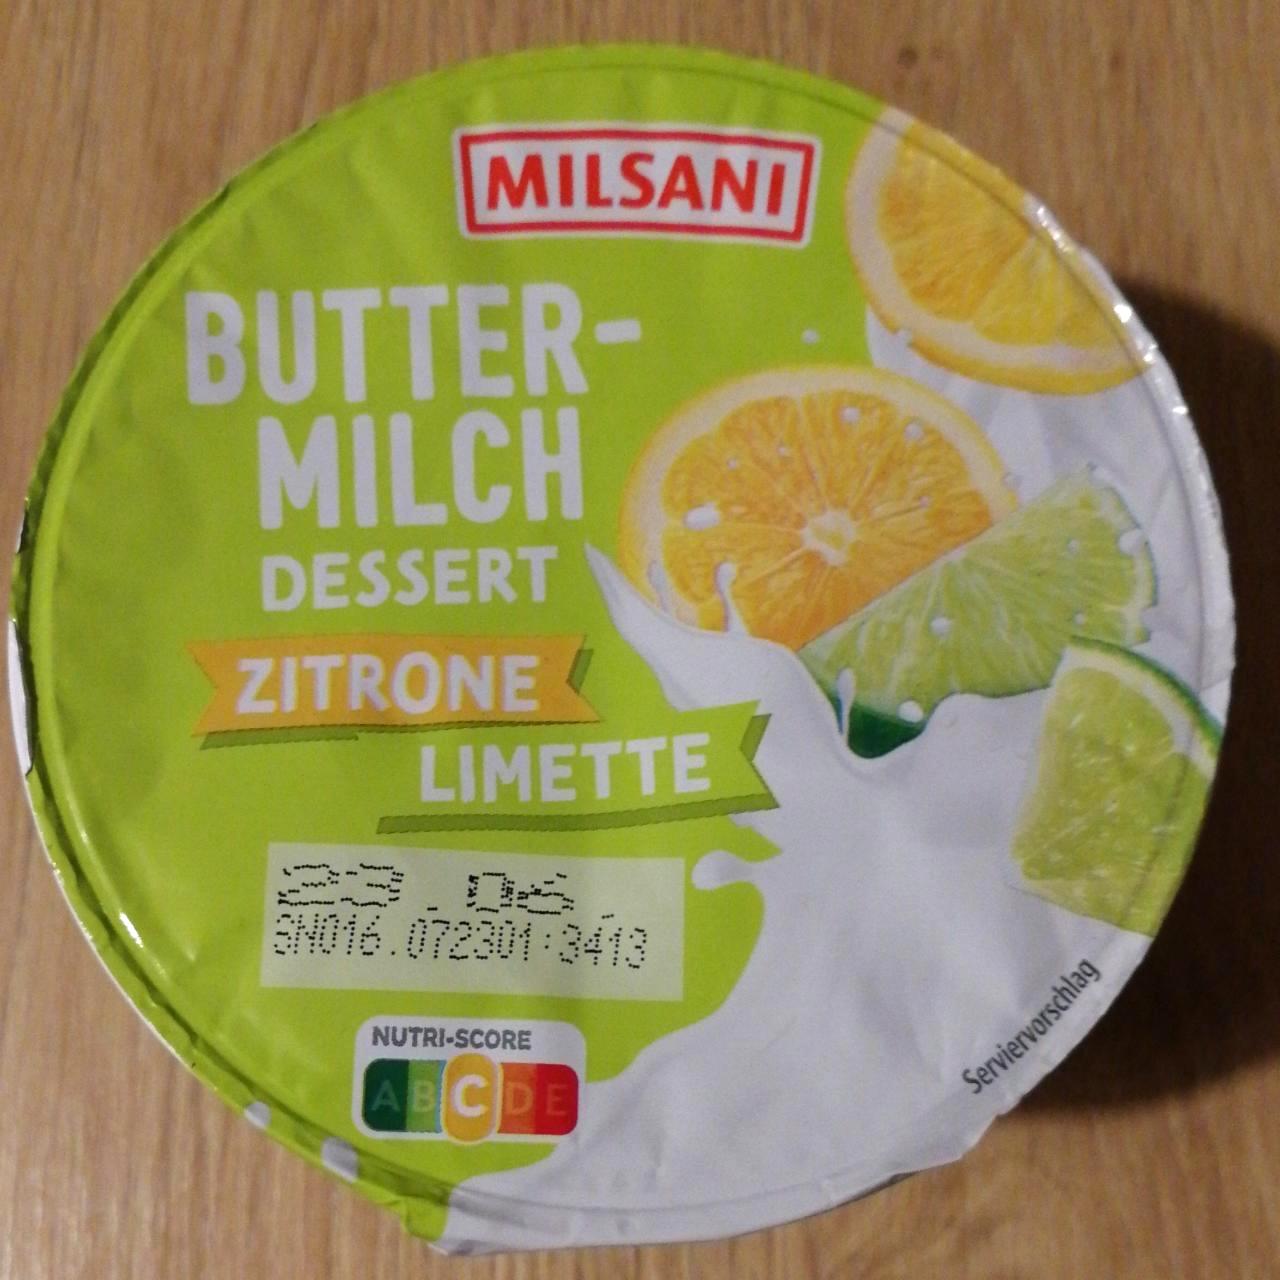 Képek - Író desszert Buttermilch dessert Zitrone-limette Milsani